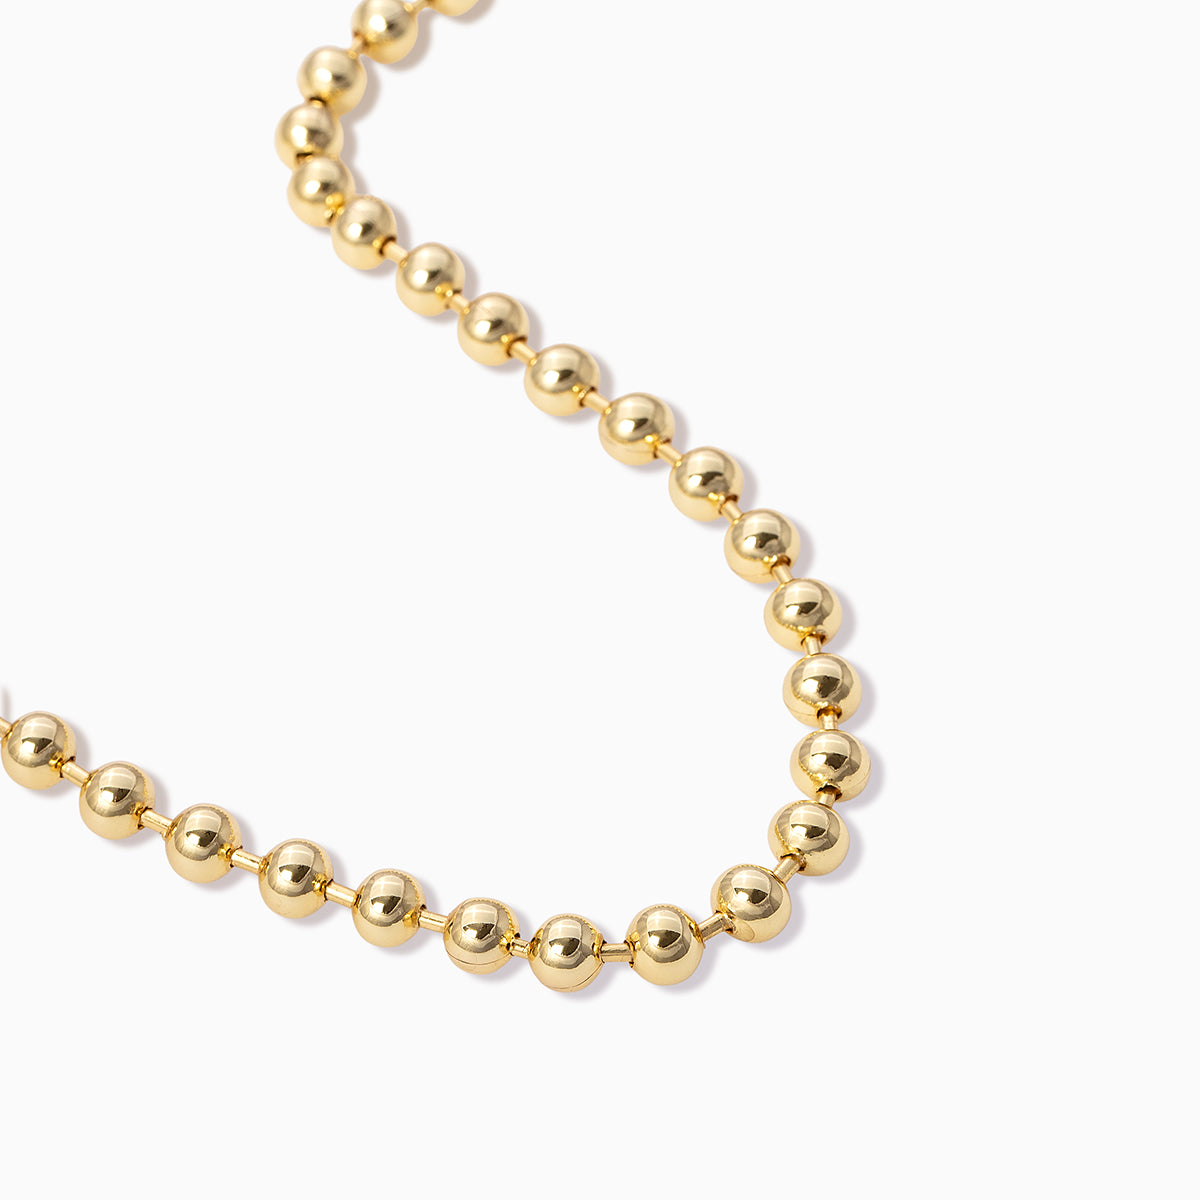 Flower Golden Ball Locket Necklace (Solid Silver) | Abbott Atelier |  Artisan Jewelry